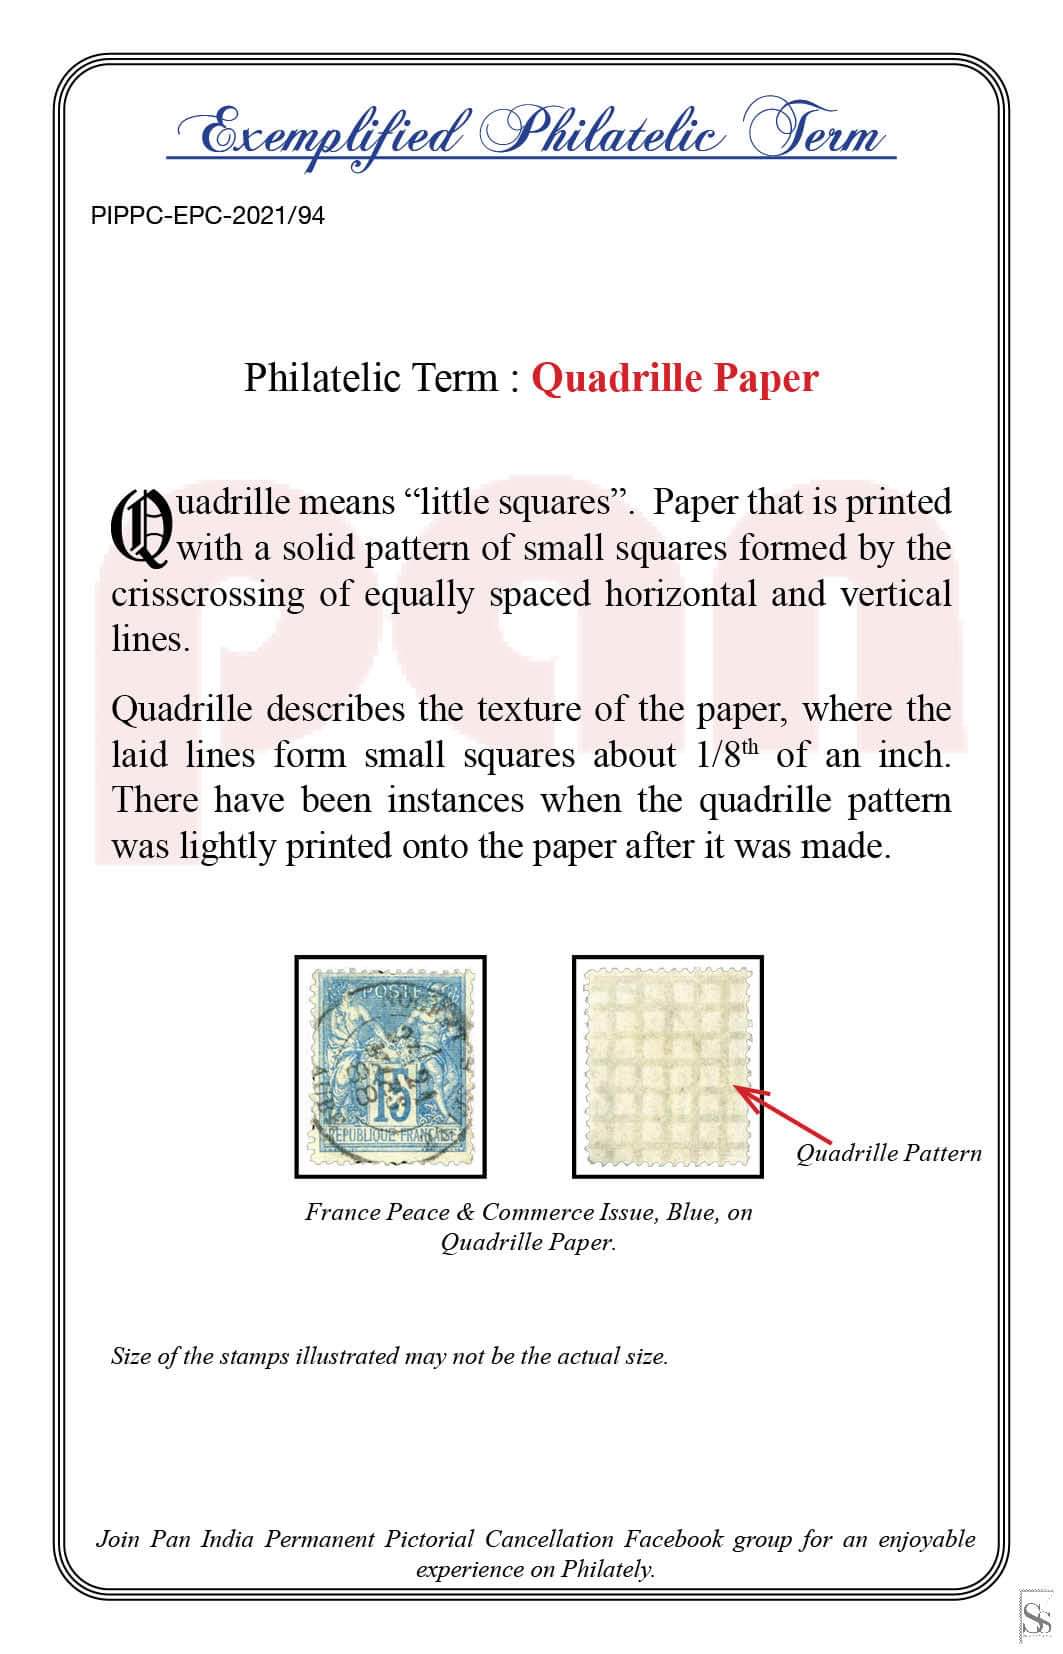 94. Today's exemplified philatelic term-Quadrille Paper